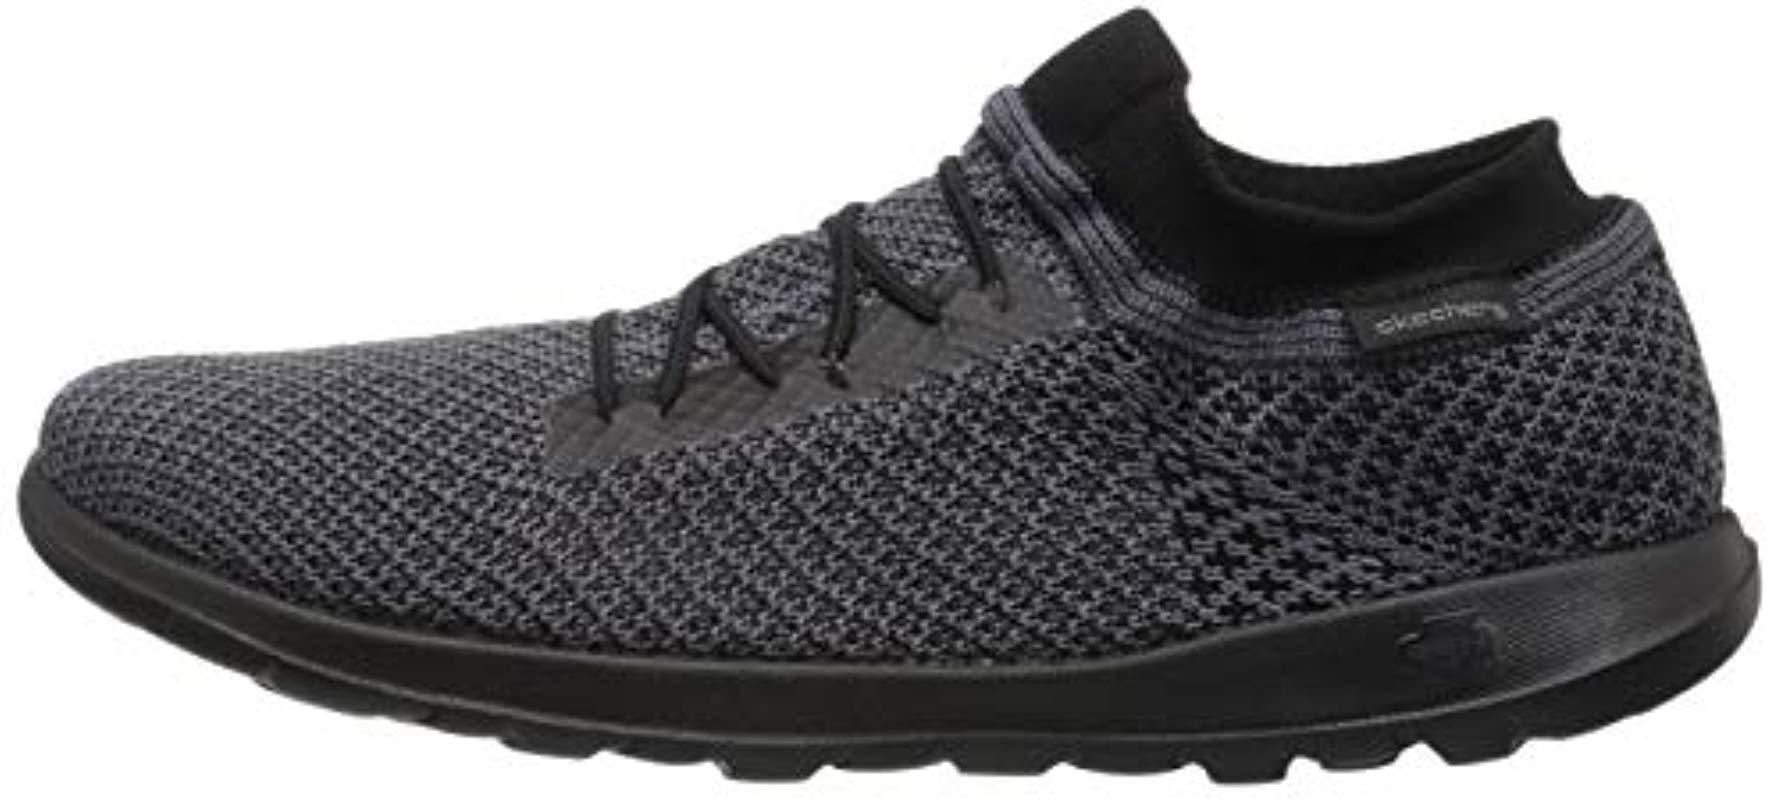 Skechers Performance Go Walk Lite-15374 Sneaker,black/gray,5.5 Lyst